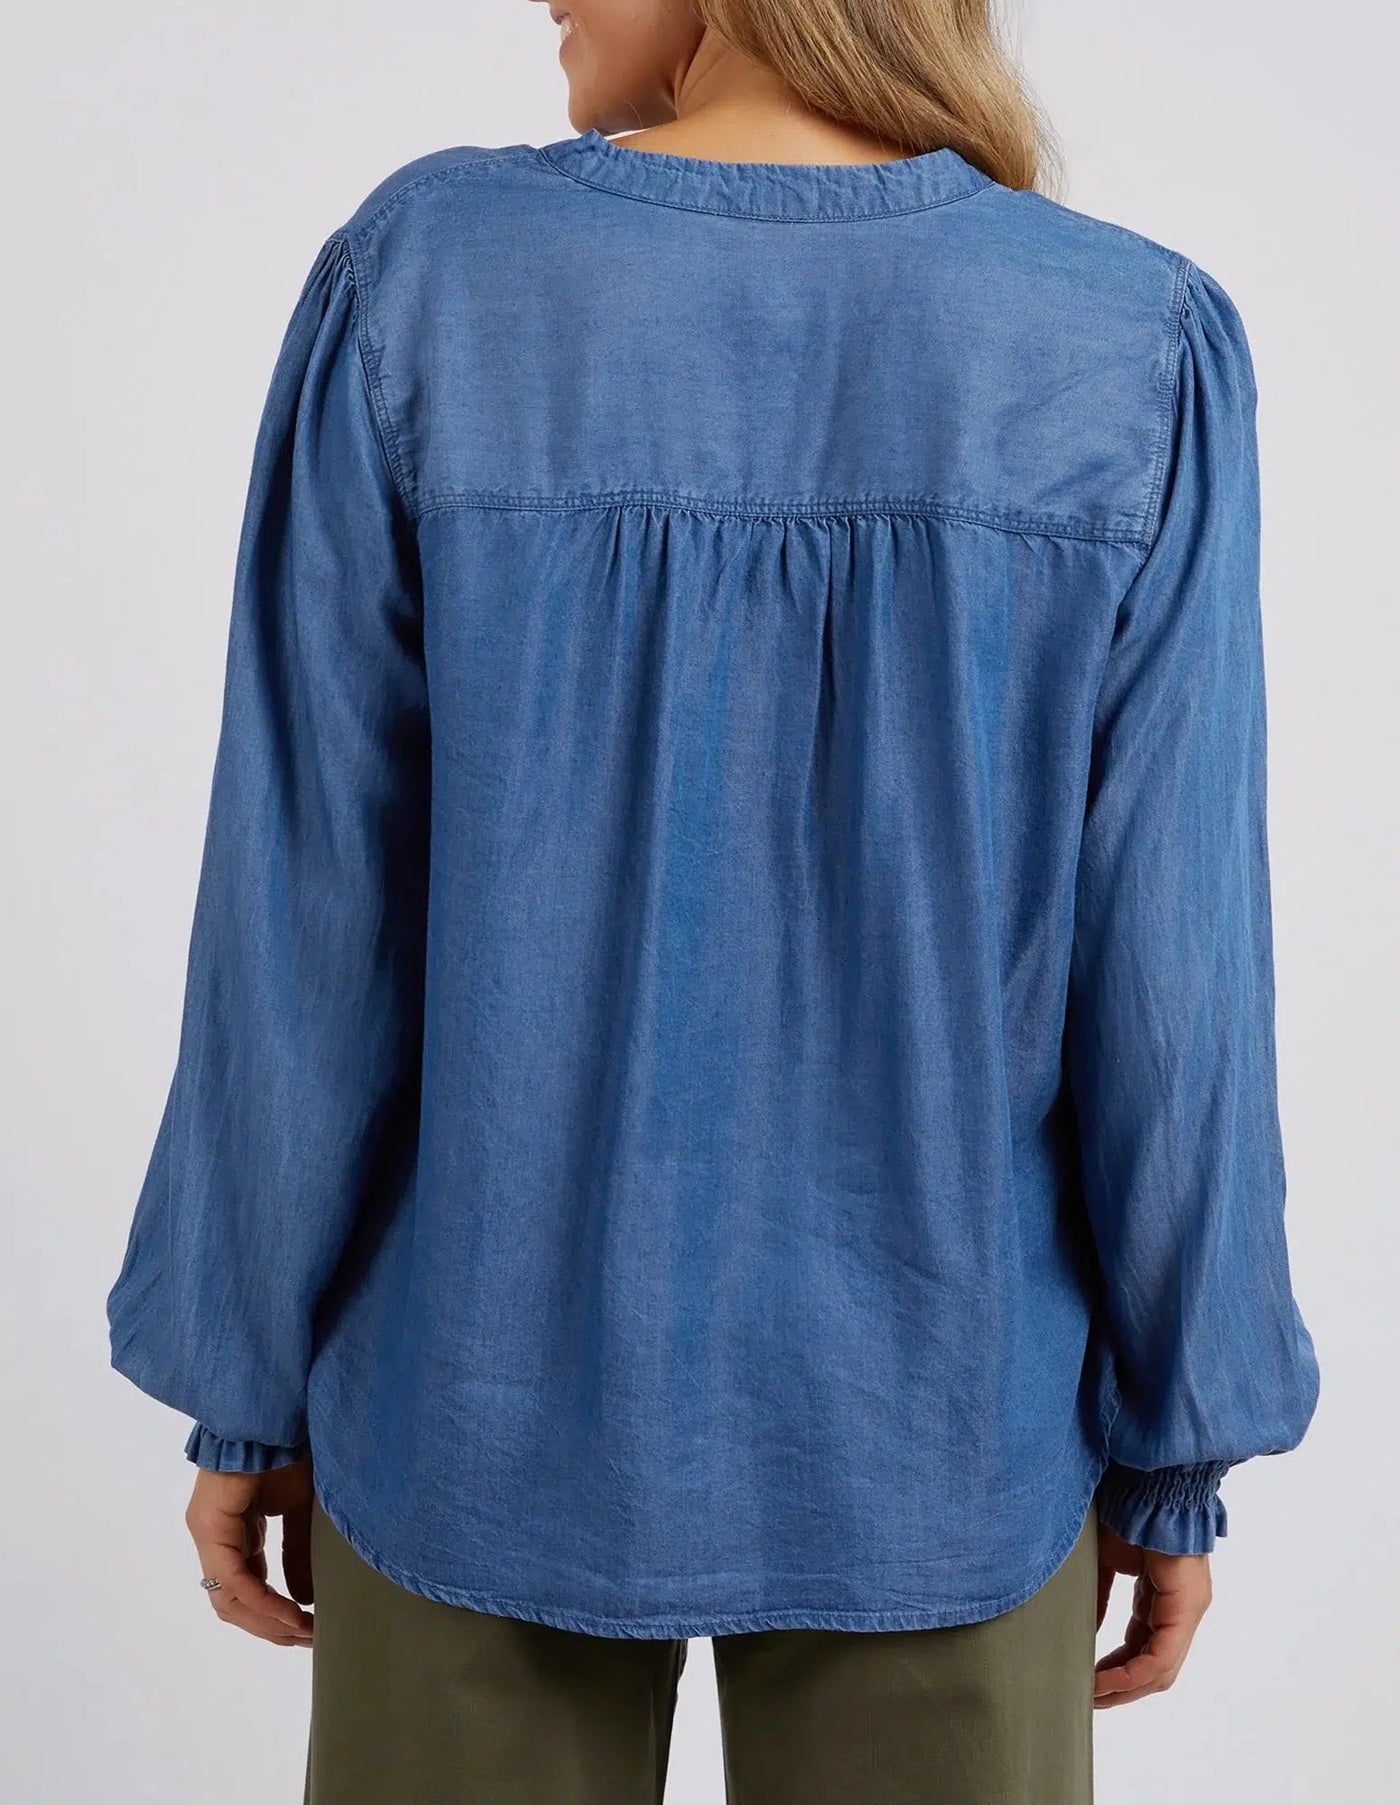 Petal Long Sleeve Top - Blue Wash-Elm Lifestyle-Lima & Co